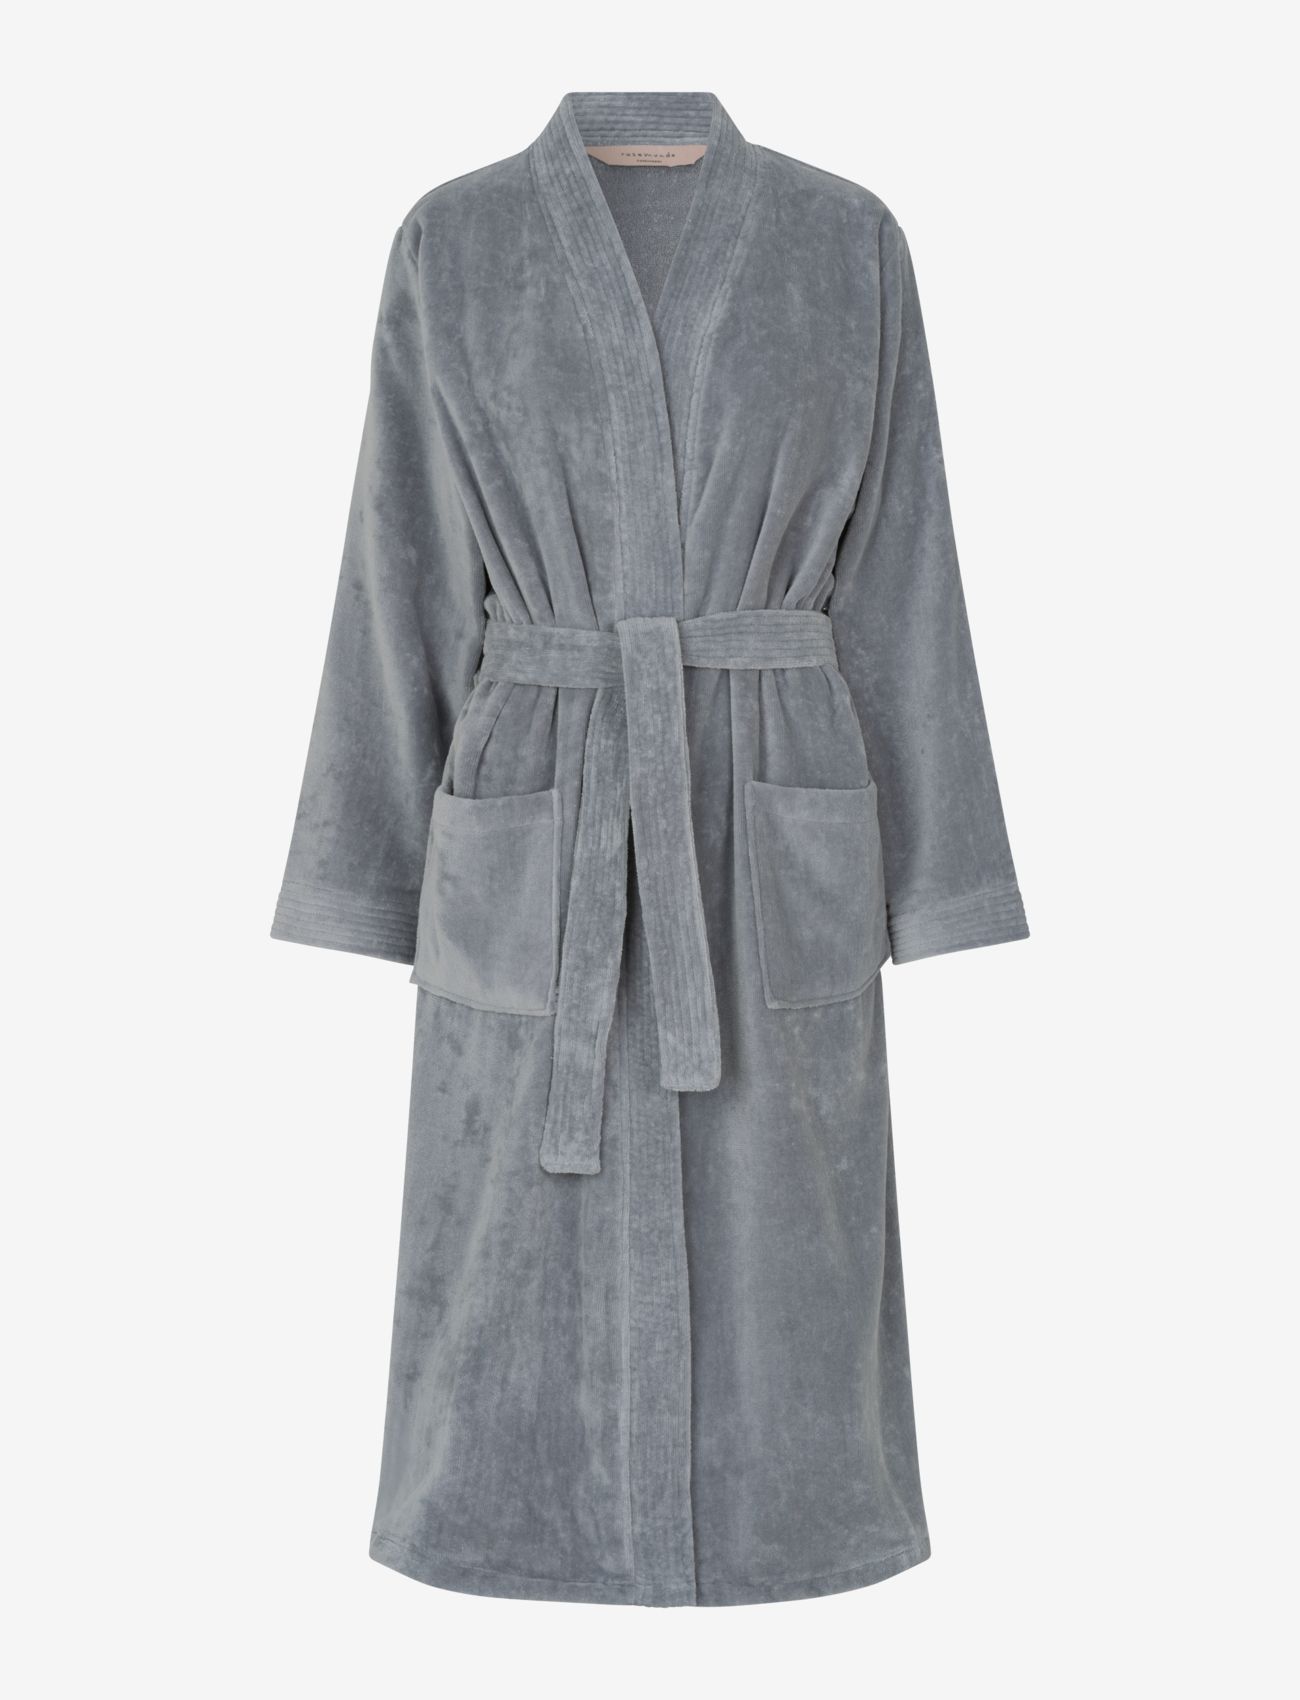 Rosemunde - Organic robe - geburtstagsgeschenke - charcoal grey - 0